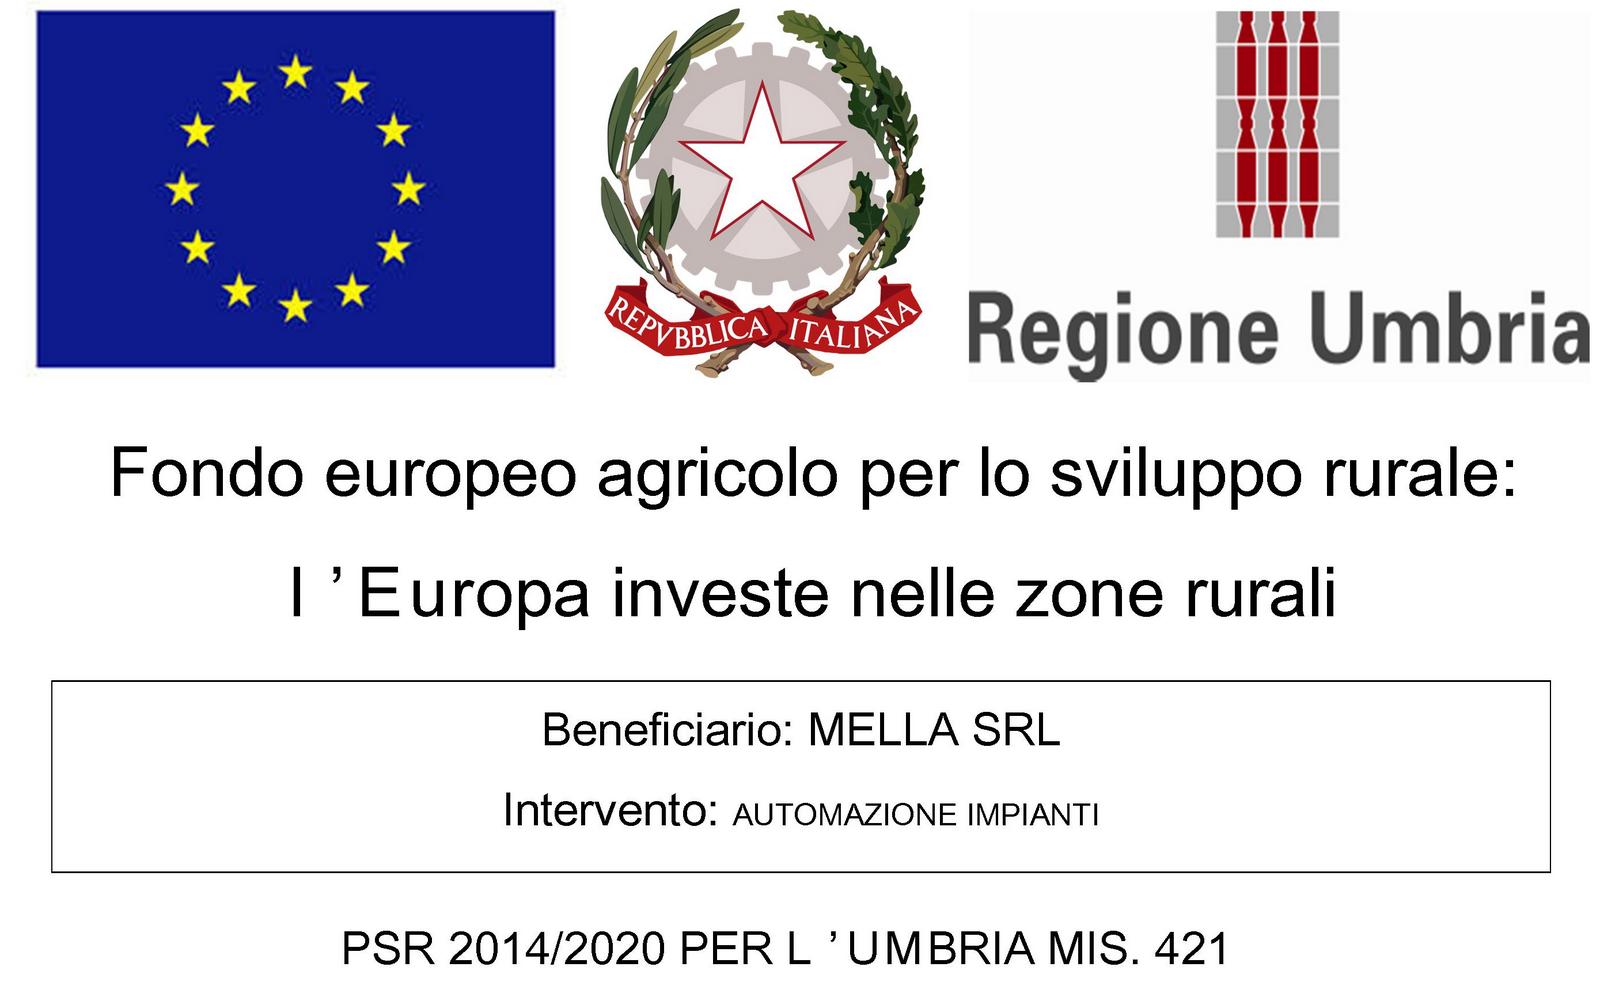 EU Rural Development